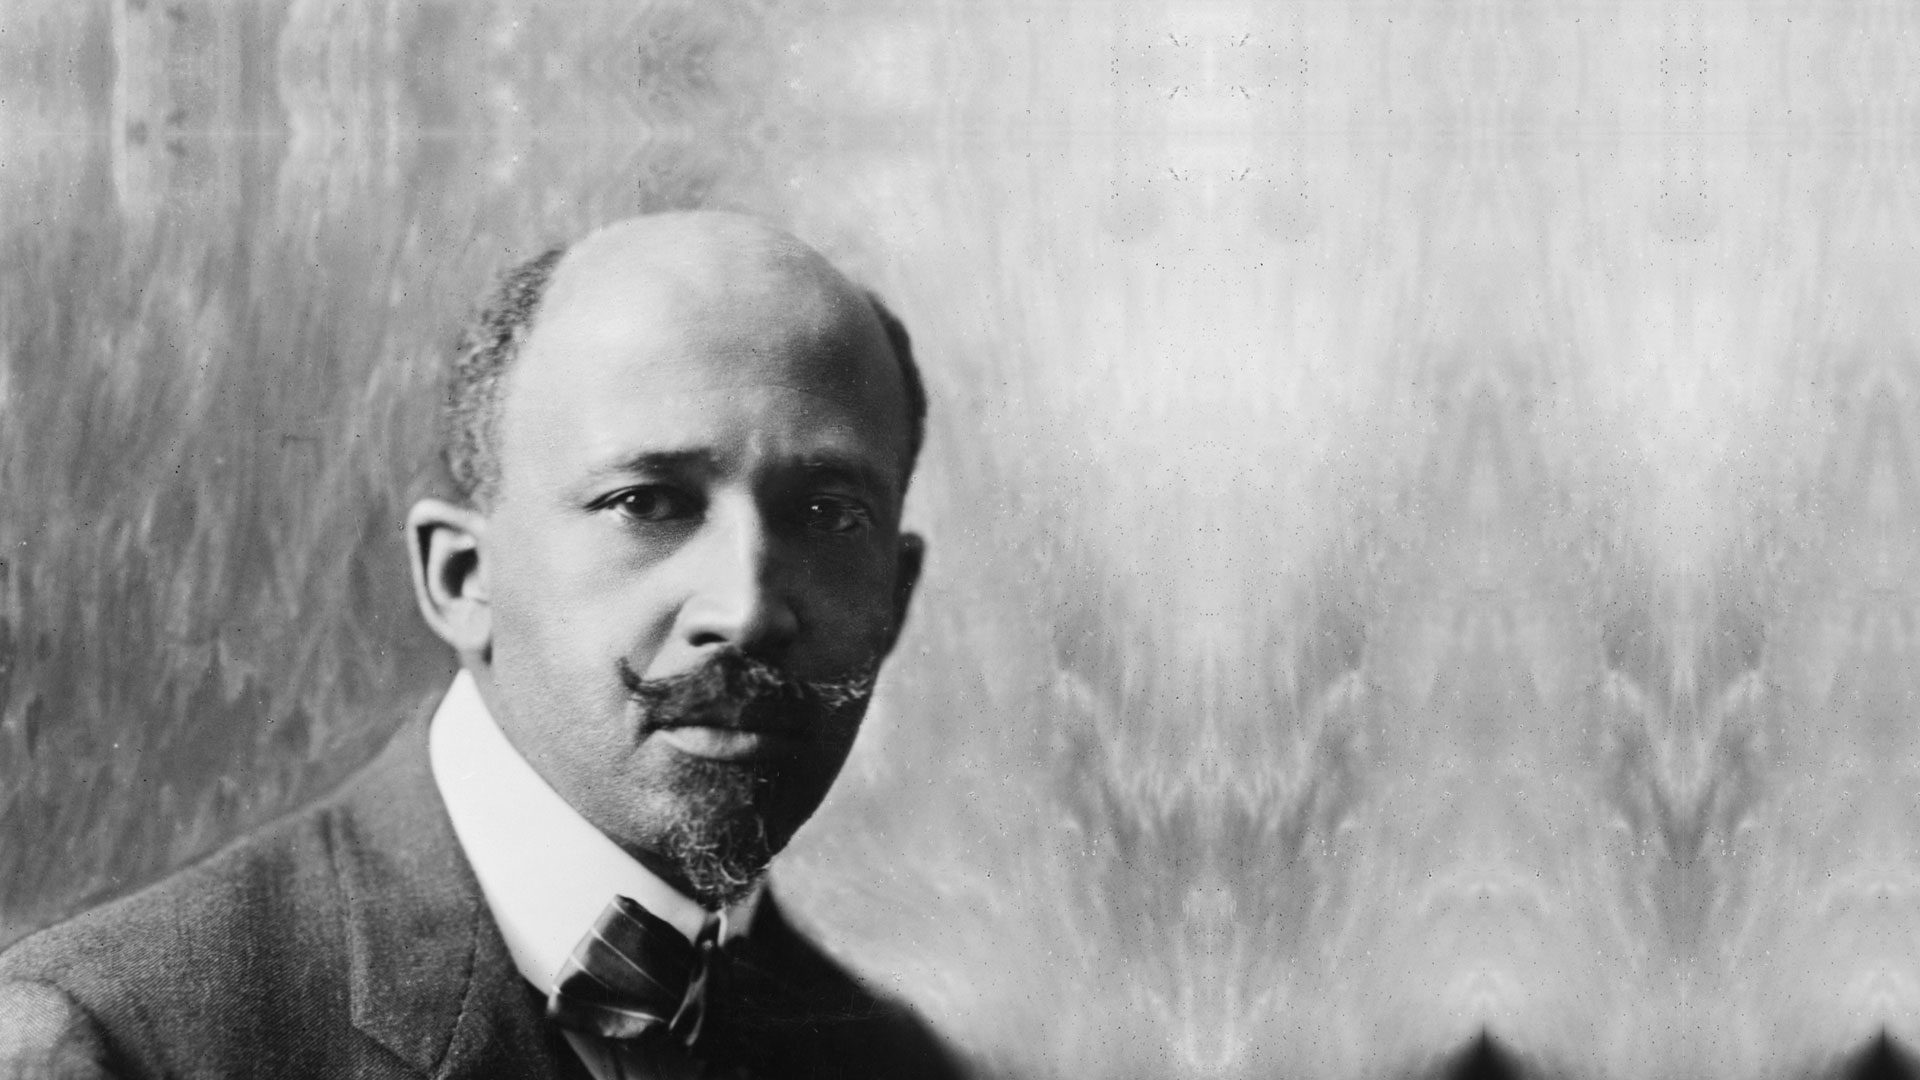 28 days of Black history: The legacy of W.E.B. Du Bois